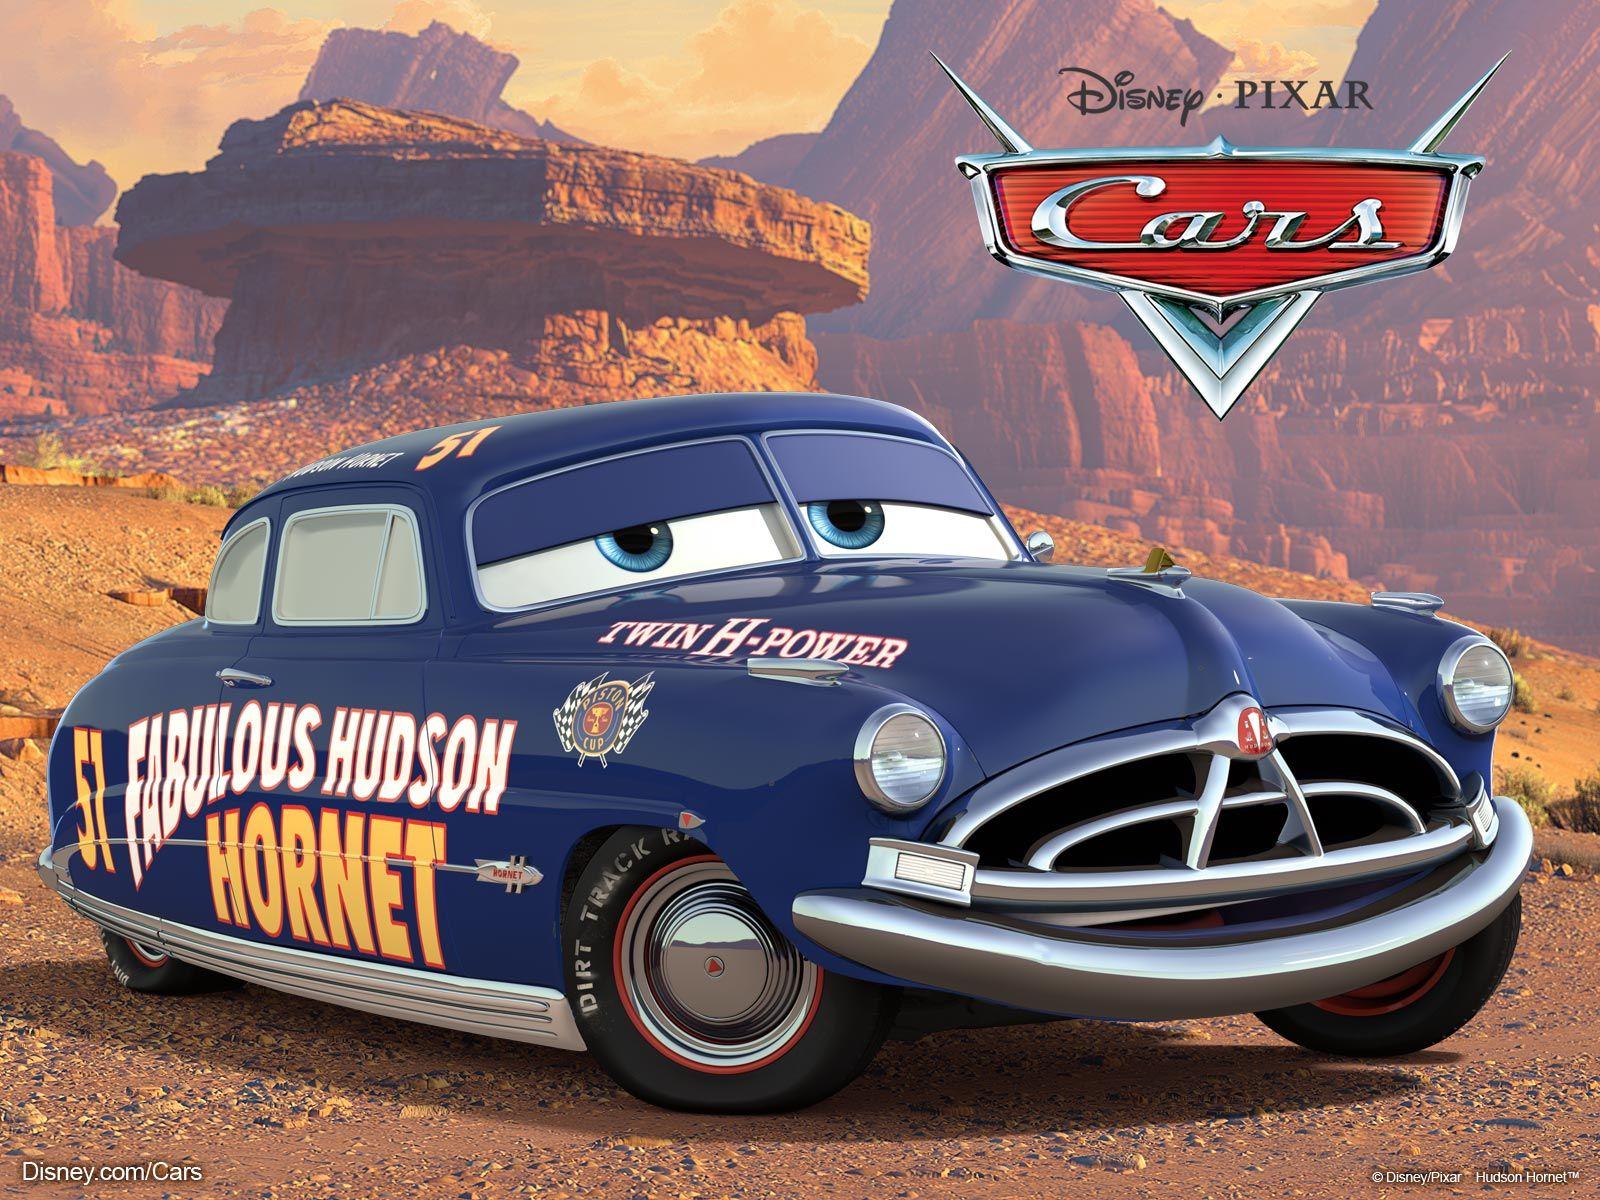 cars the movie. Doc Hudson Race Car from Pixar Cars Movie wallpaper picture. Cars movie, Pixar cars, Disney cars wallpaper